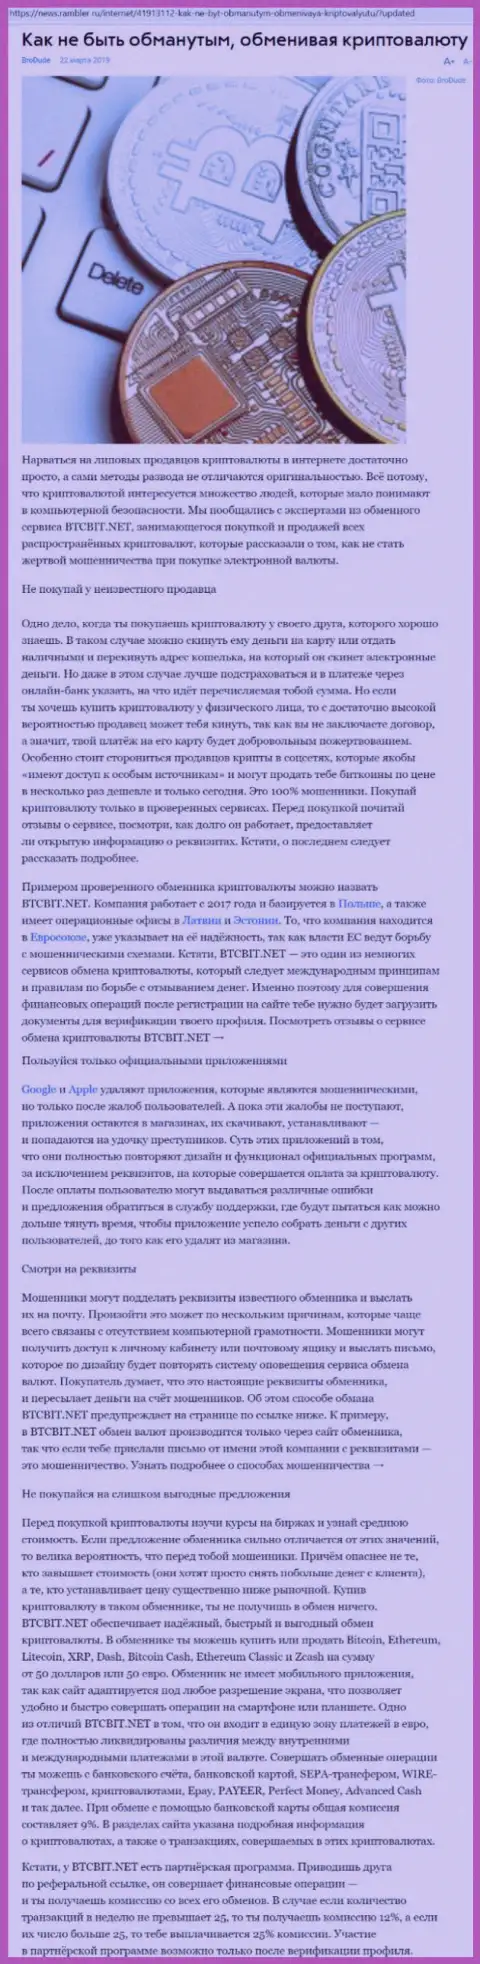 Публикация о БТЦБИТ Нет на News Rambler Ru